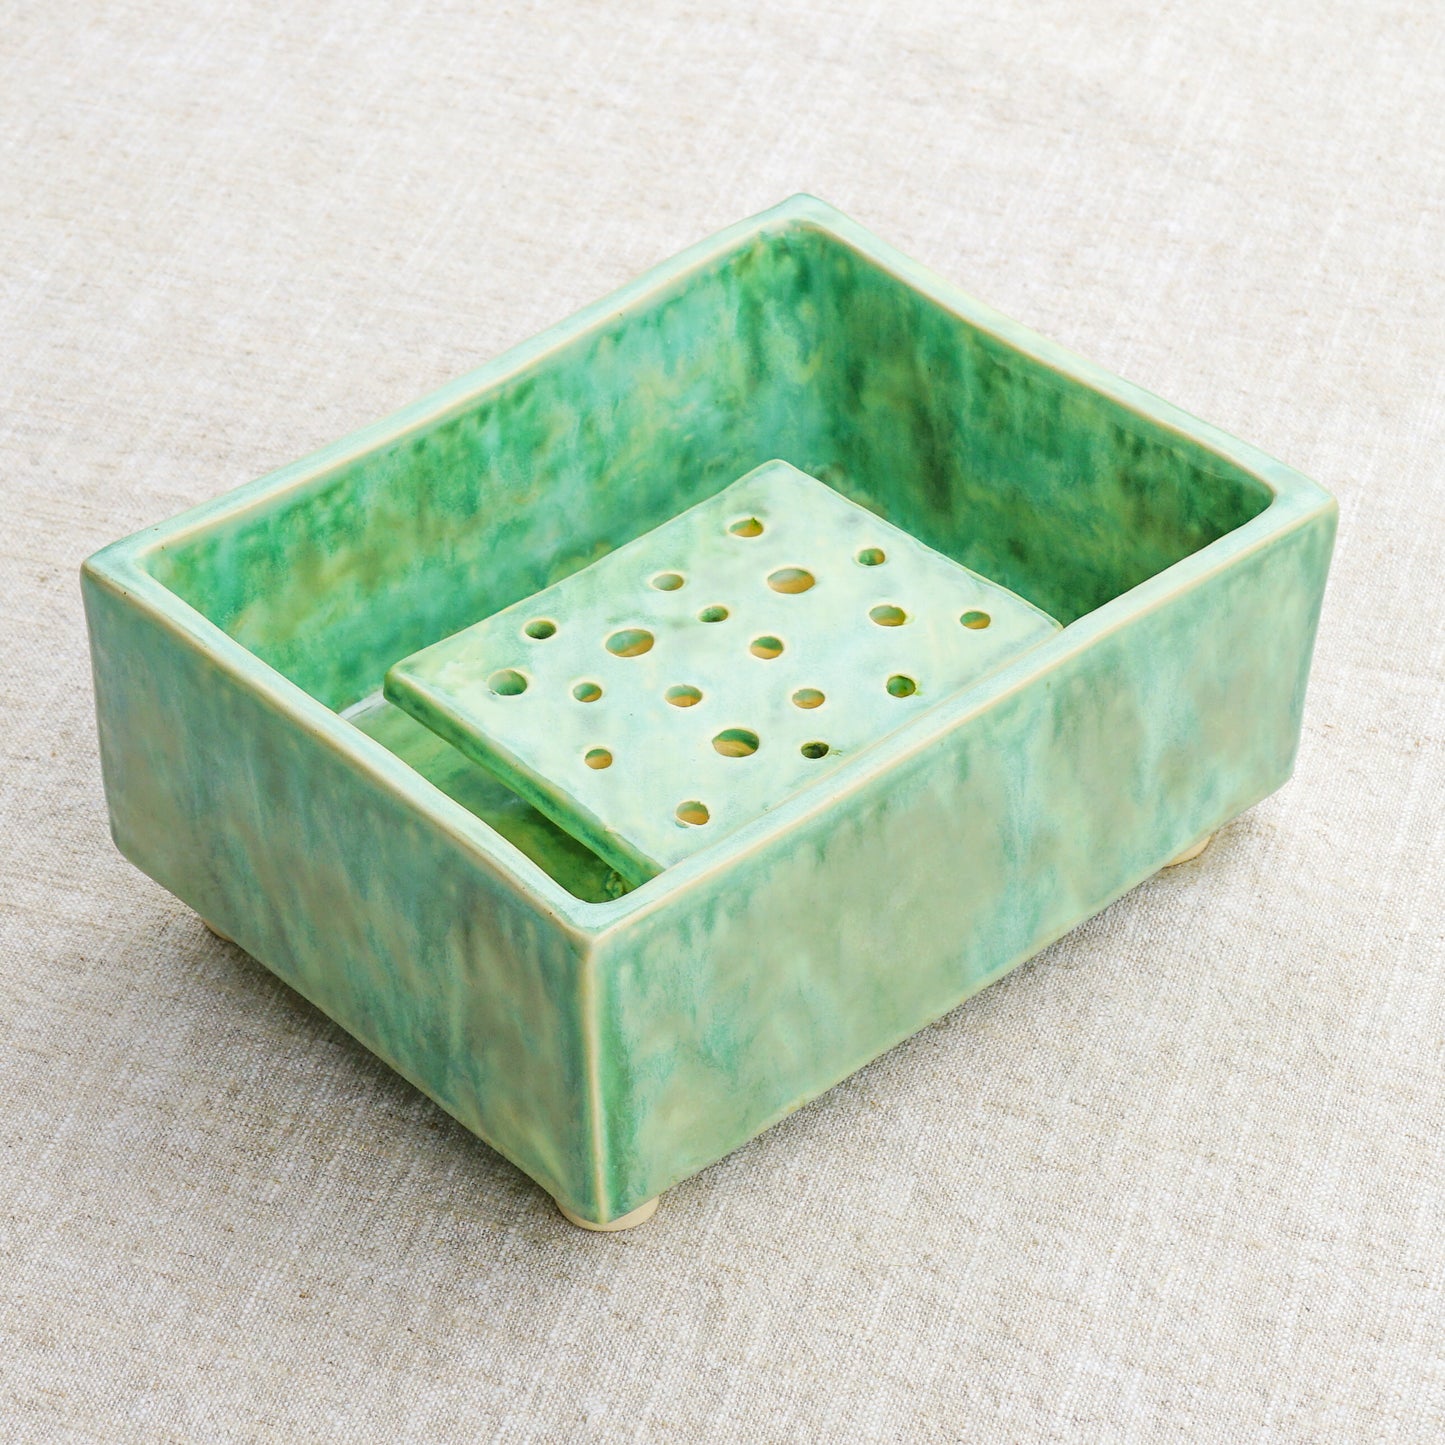 The Jade Ikebana Vase-Preorder Now